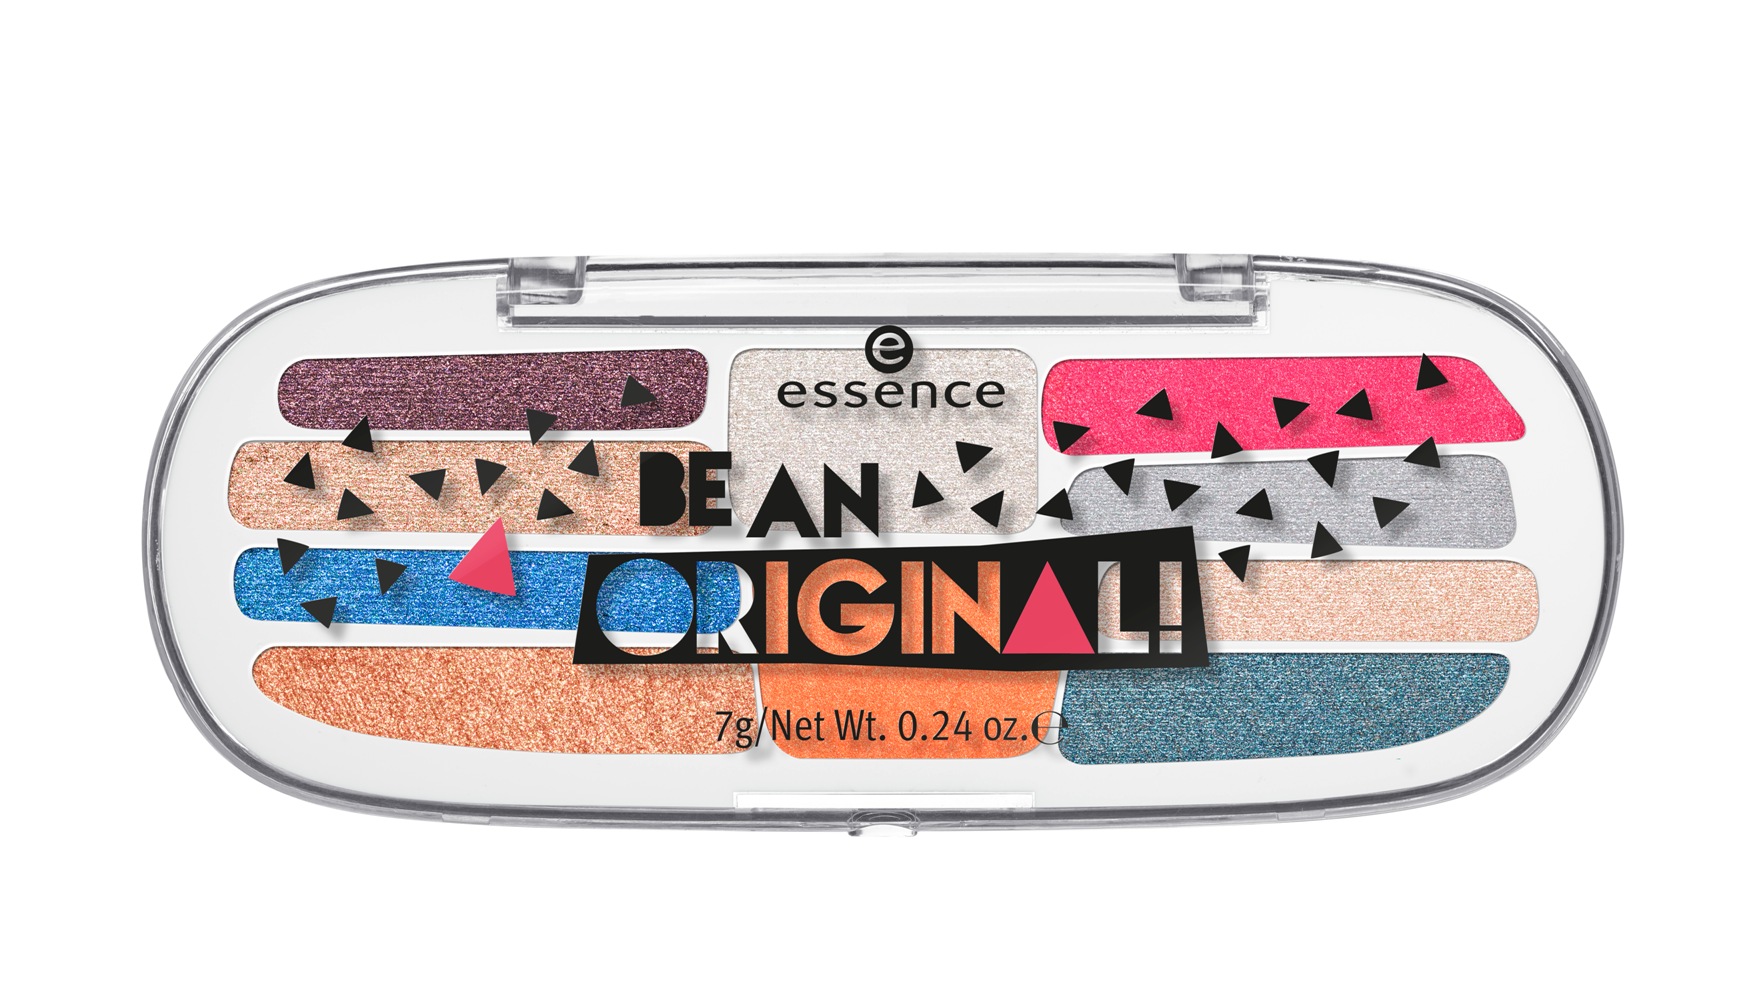 essence be an original! eyeshadow box 05